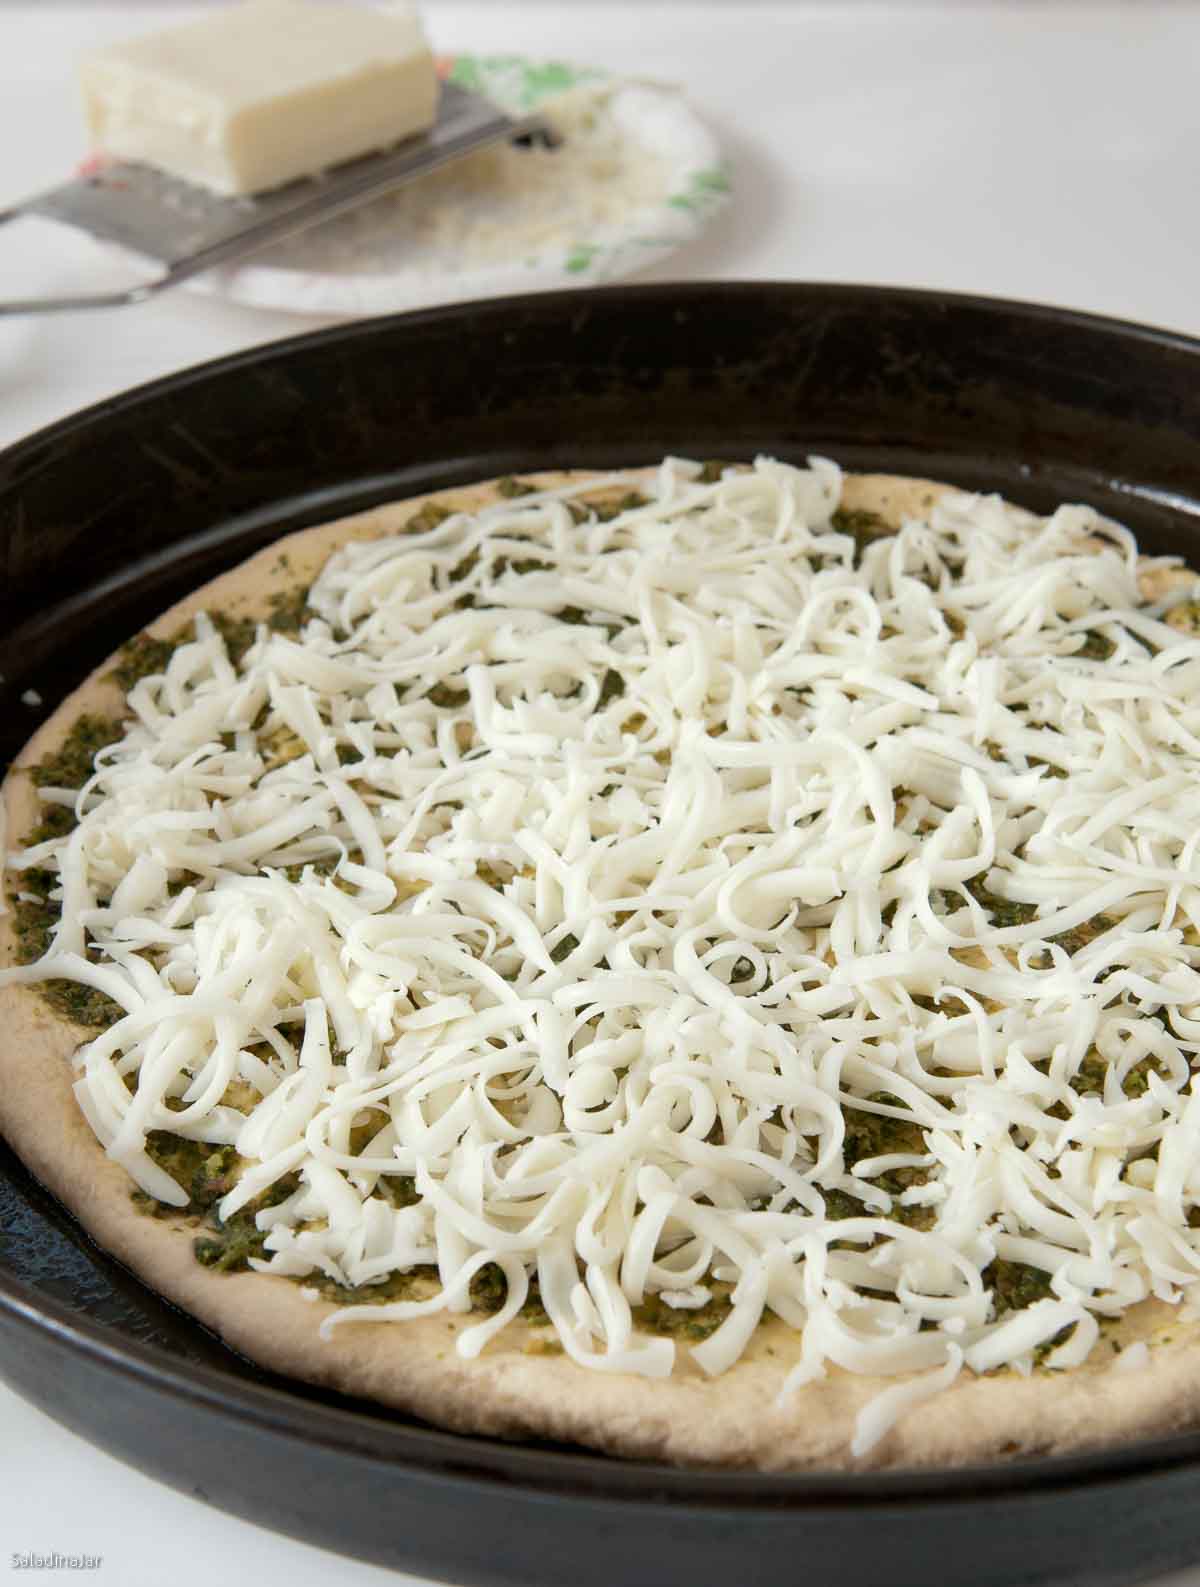 layer of Mozzarella cheese.